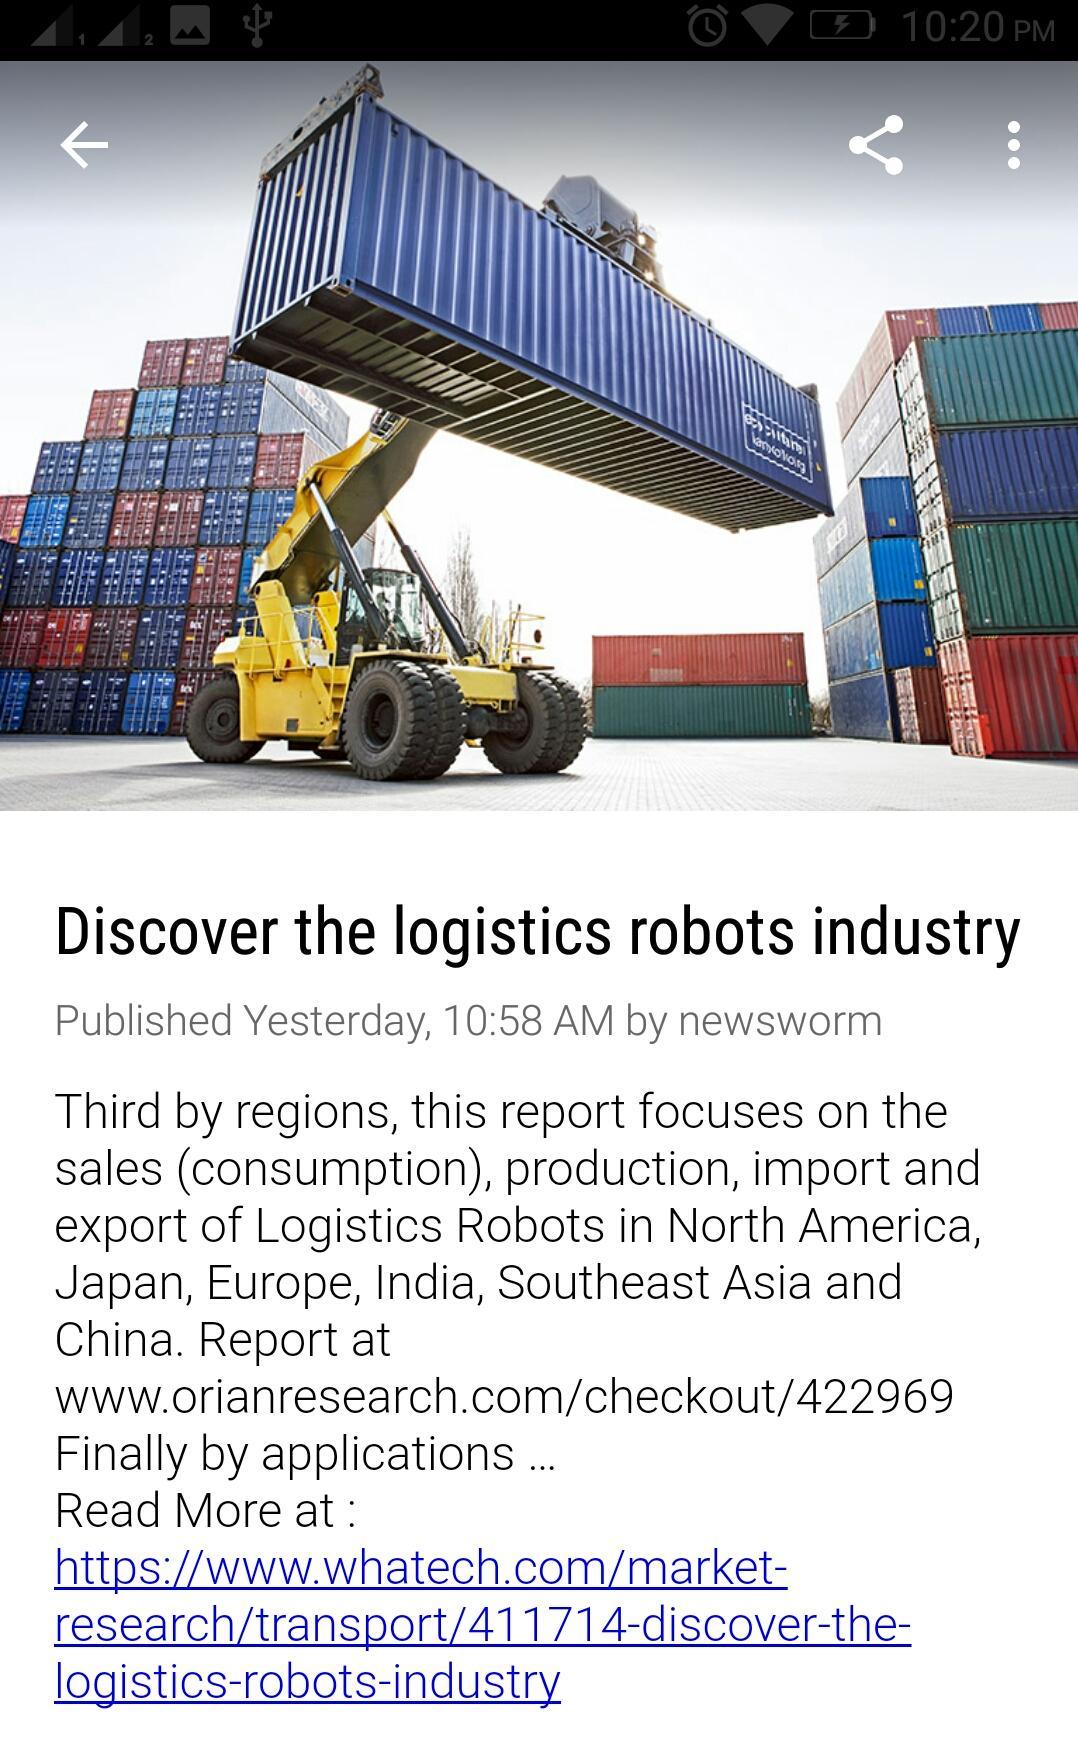 Logistics industry news